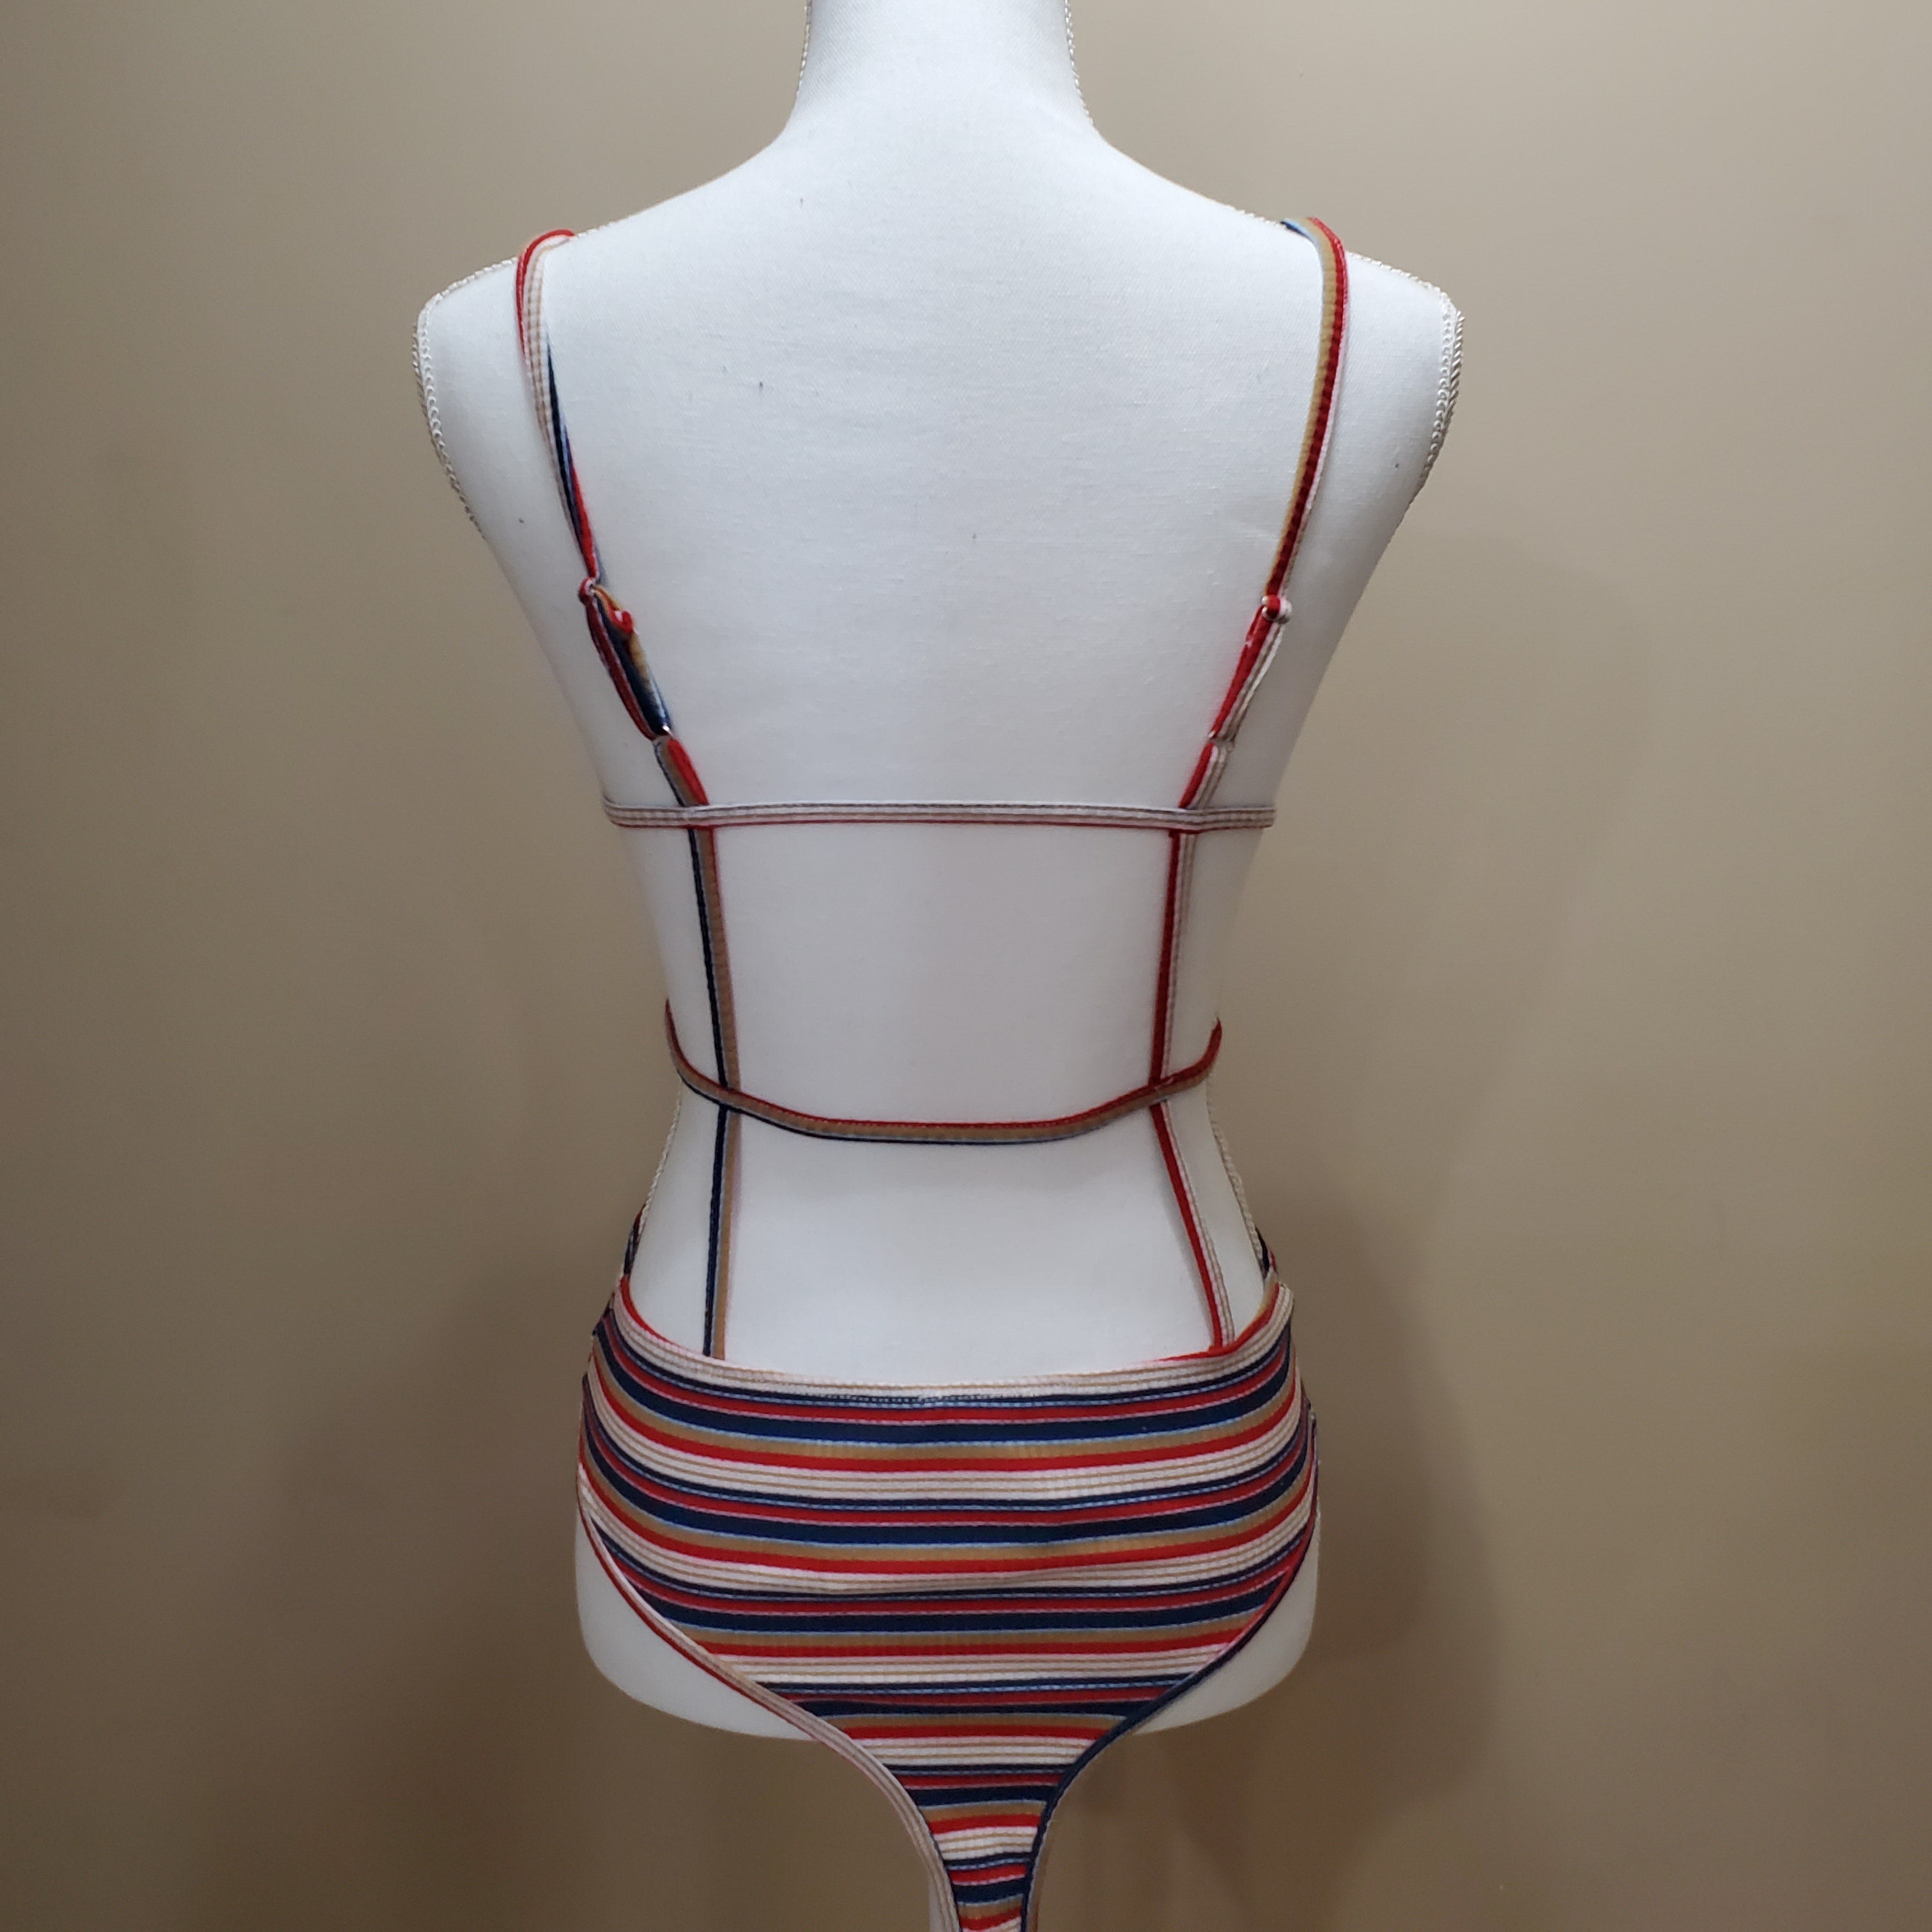 Striped Bodysuit (small)